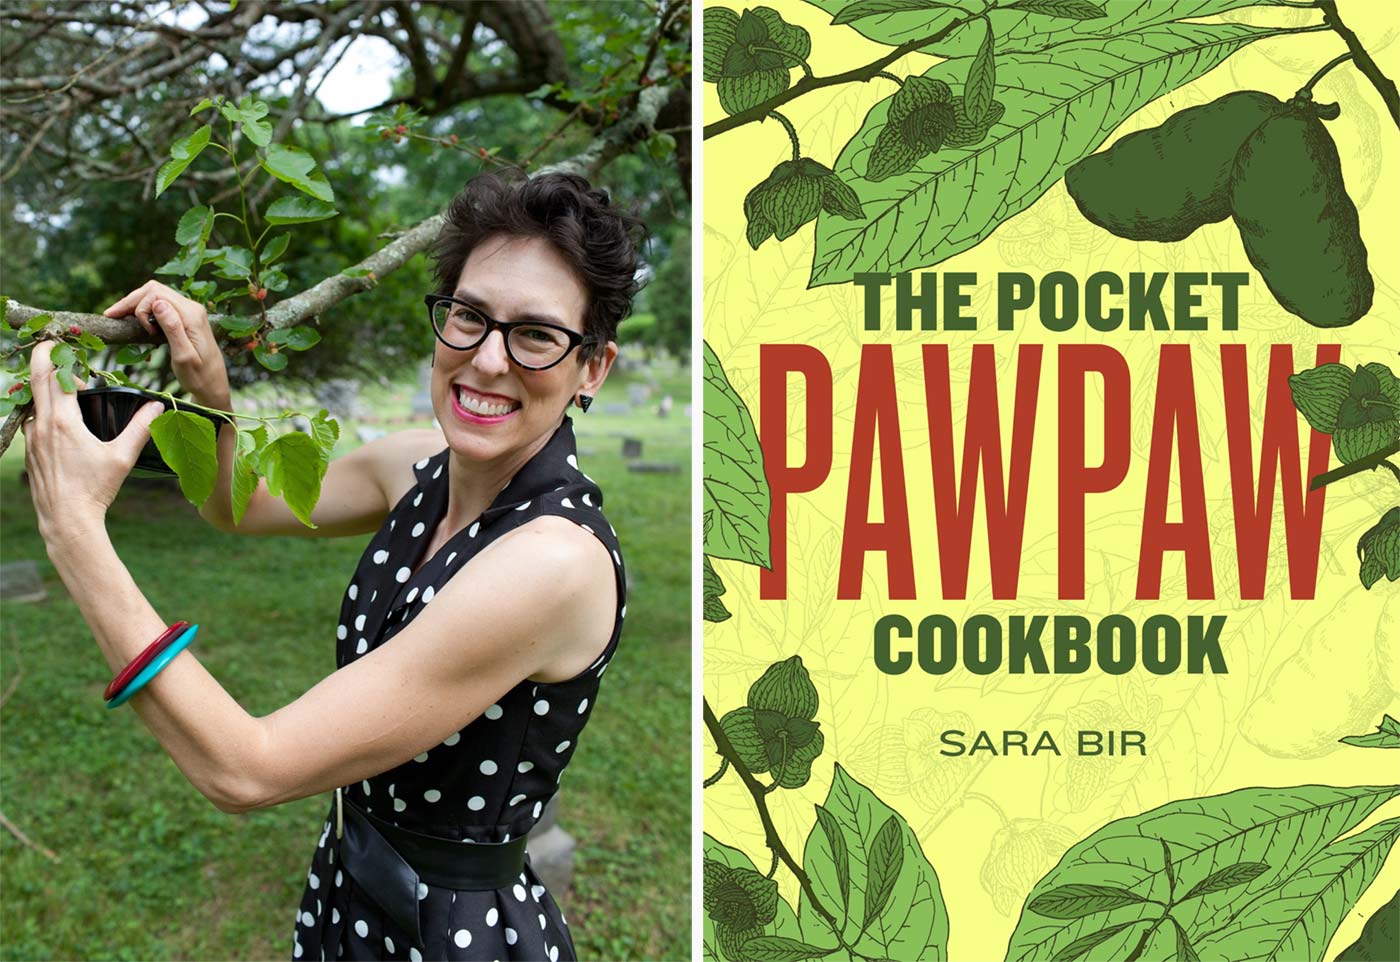 Sara Bir and Pawpaw Cookbook